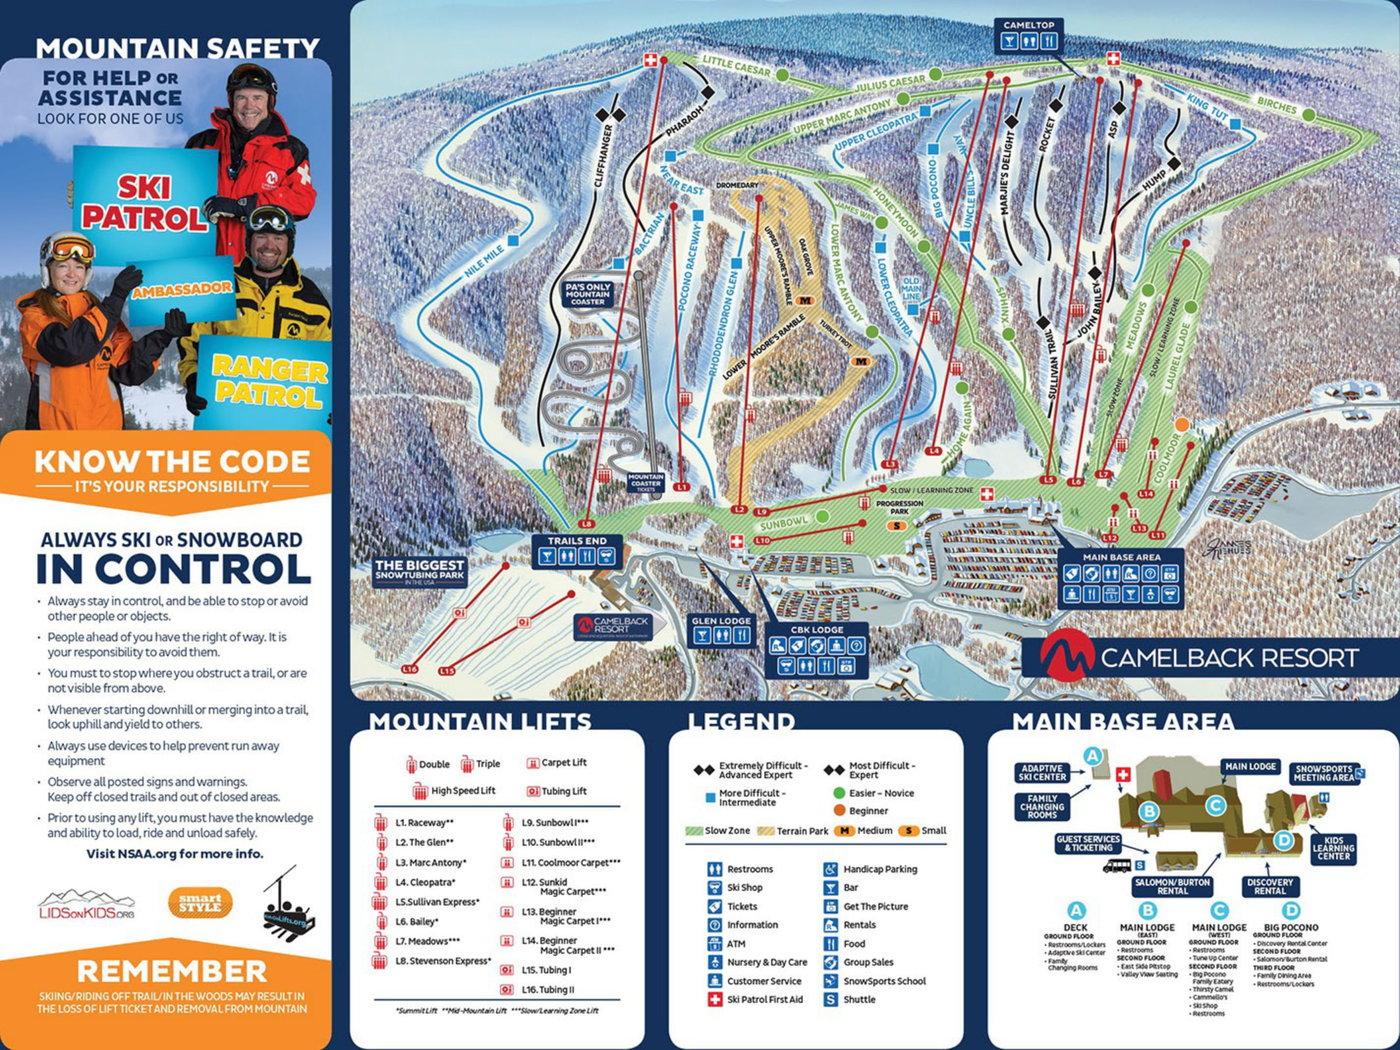 Camelback Mountain Resort Trail Map